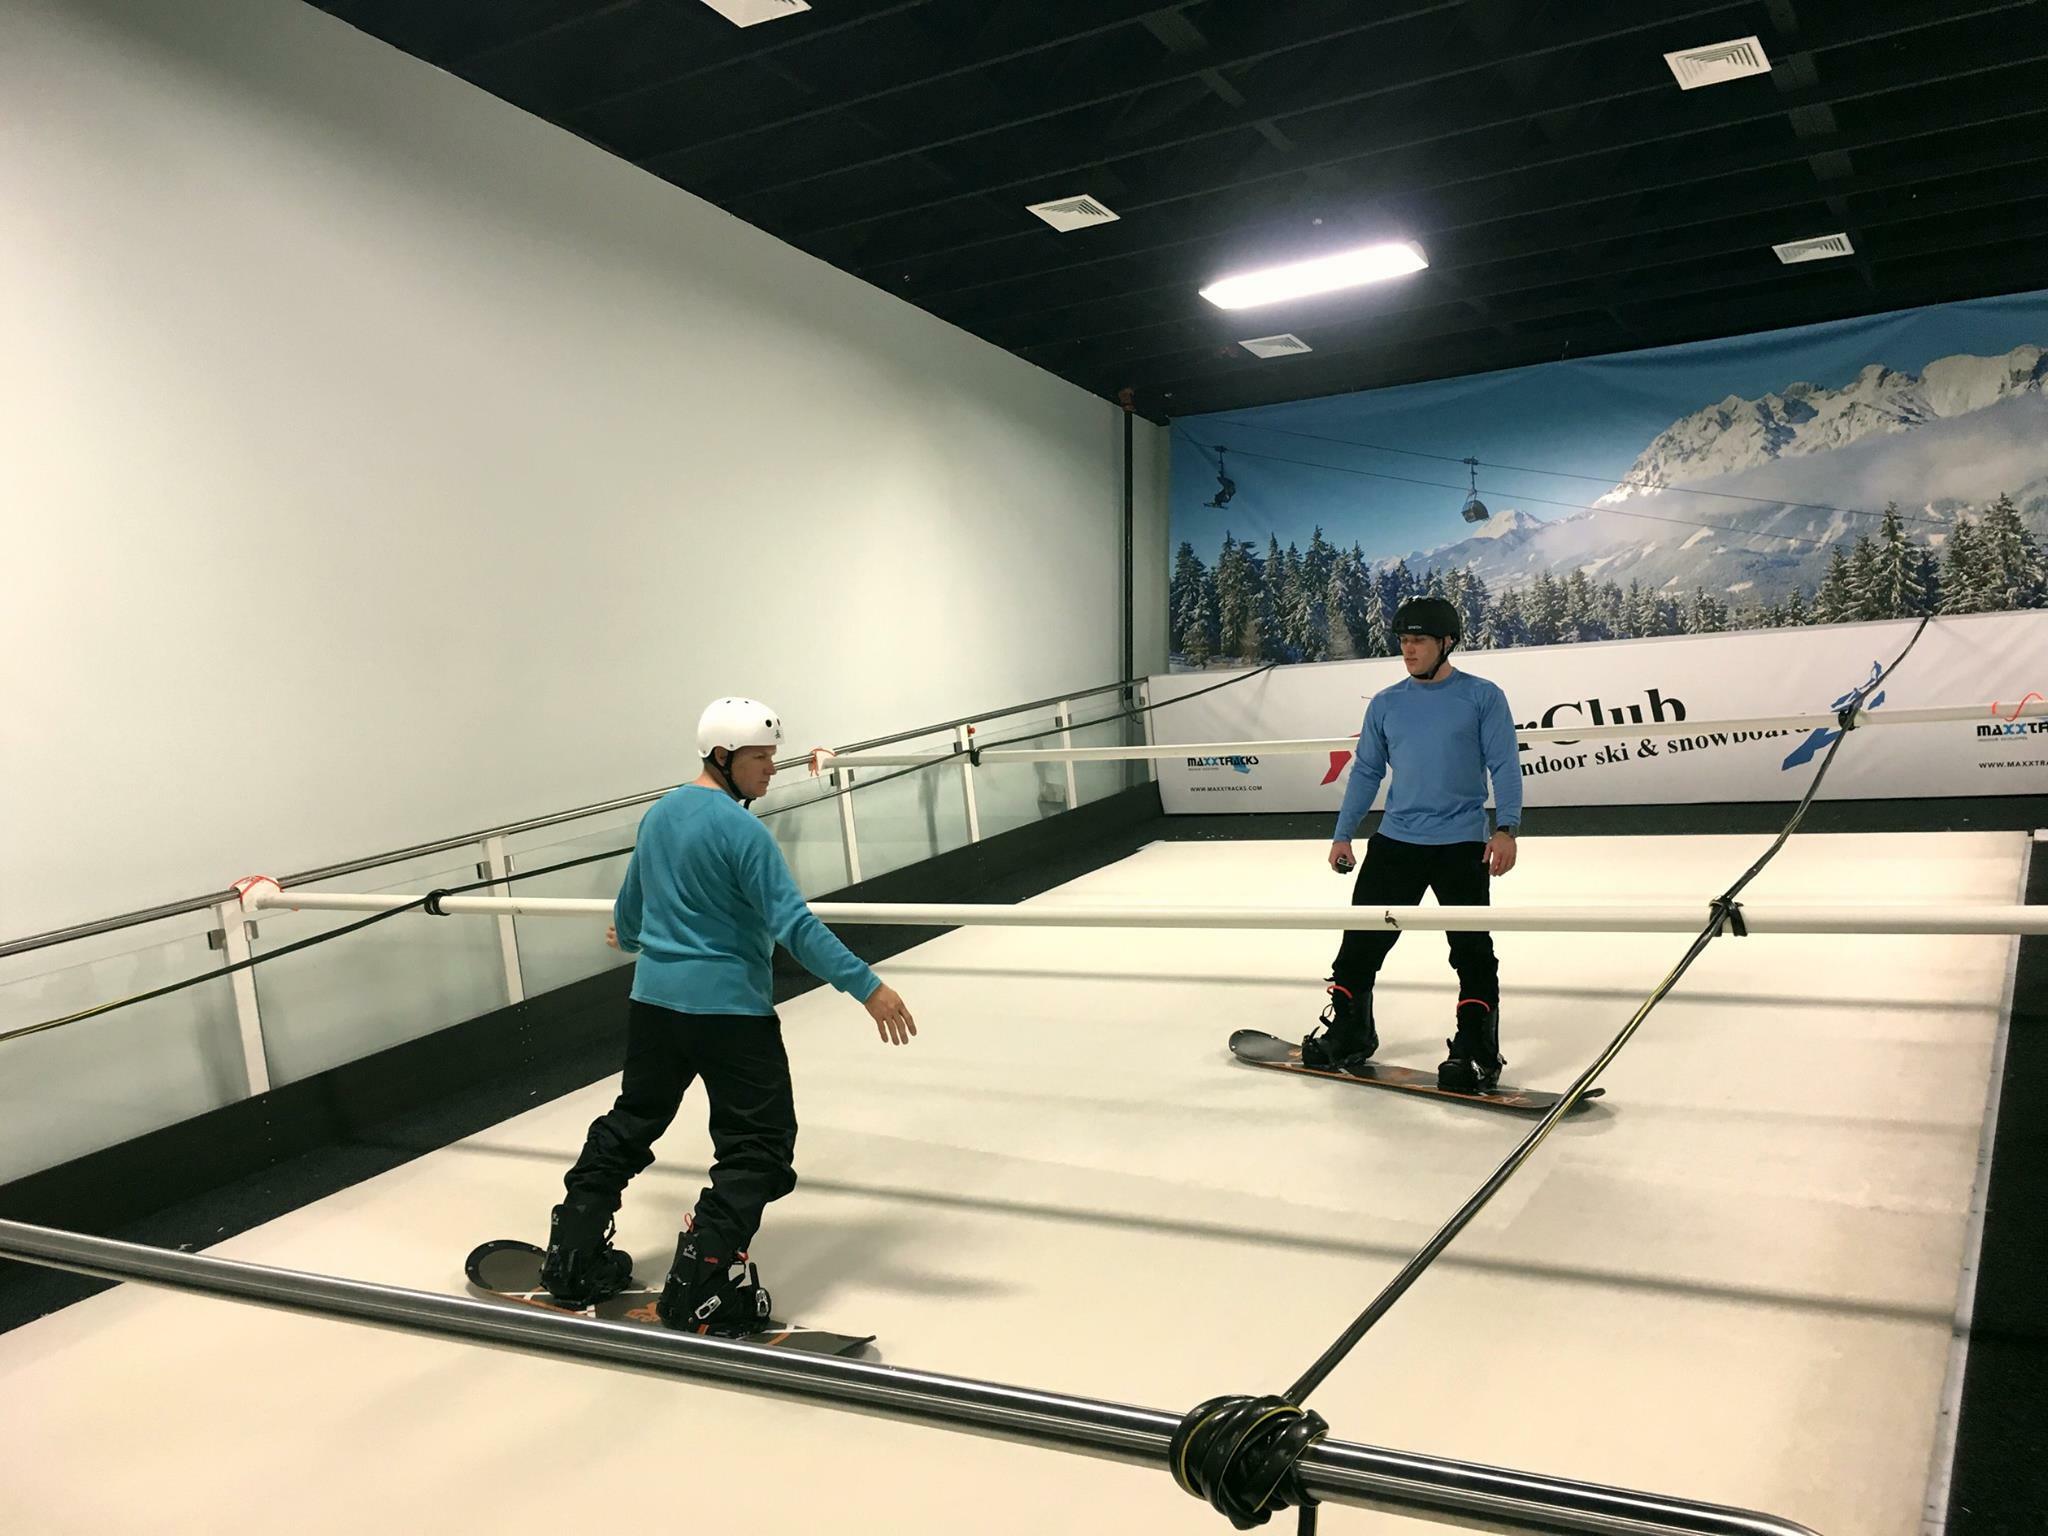 WinterClub Indoor Ski and Snowboard